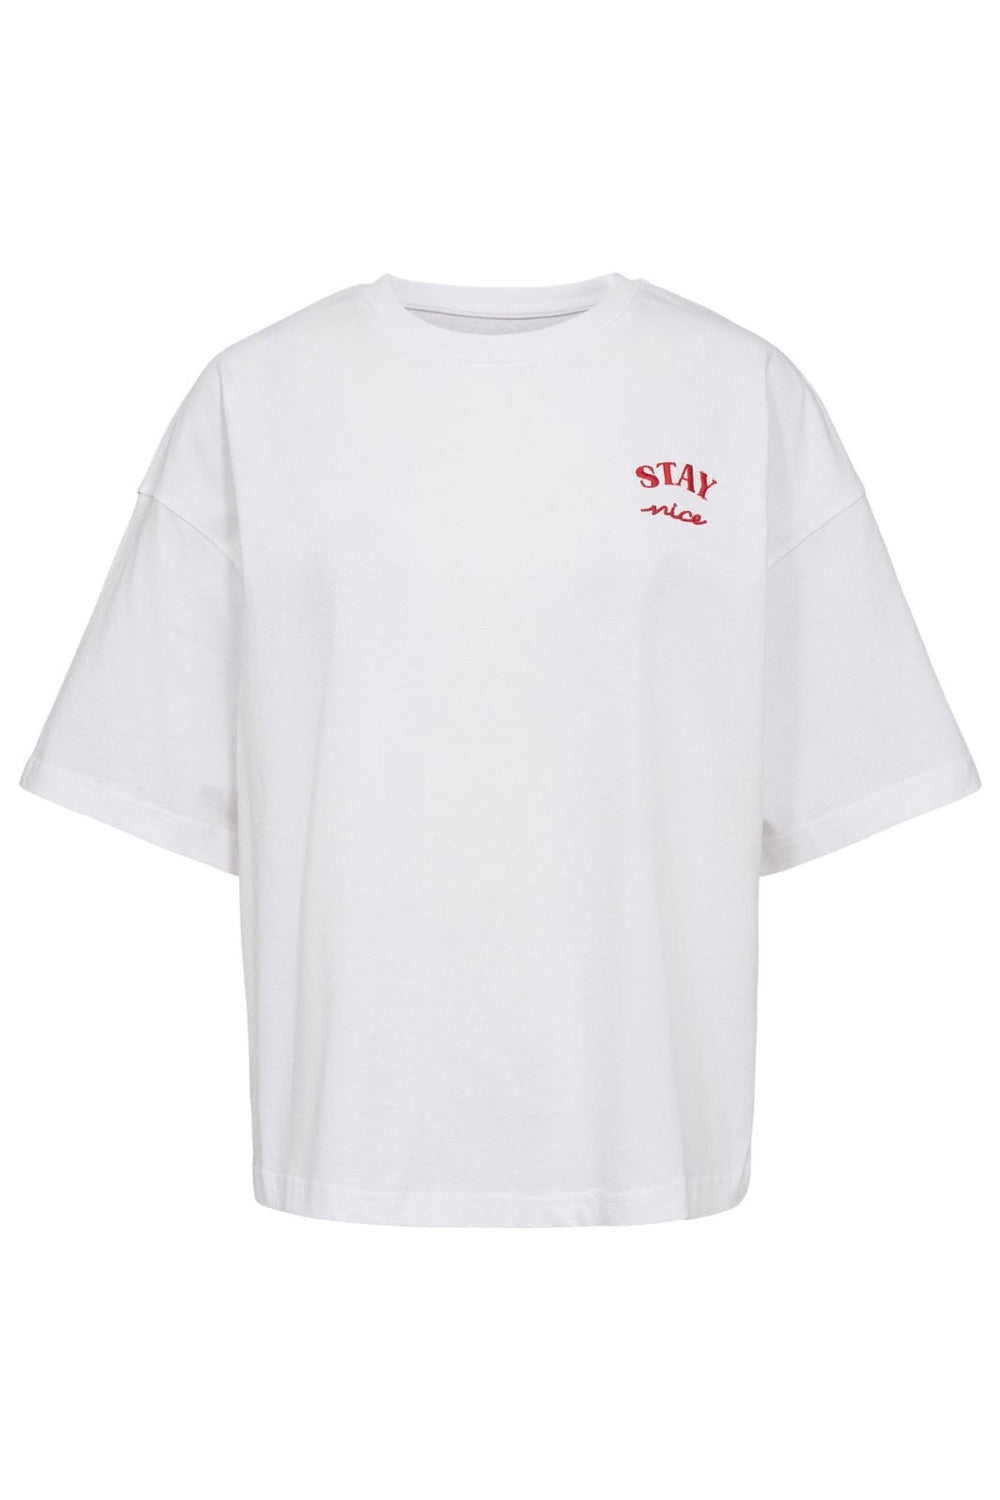 Sofie Schnoor - S241236 T-Shirt - Brilliant White T-shirts 